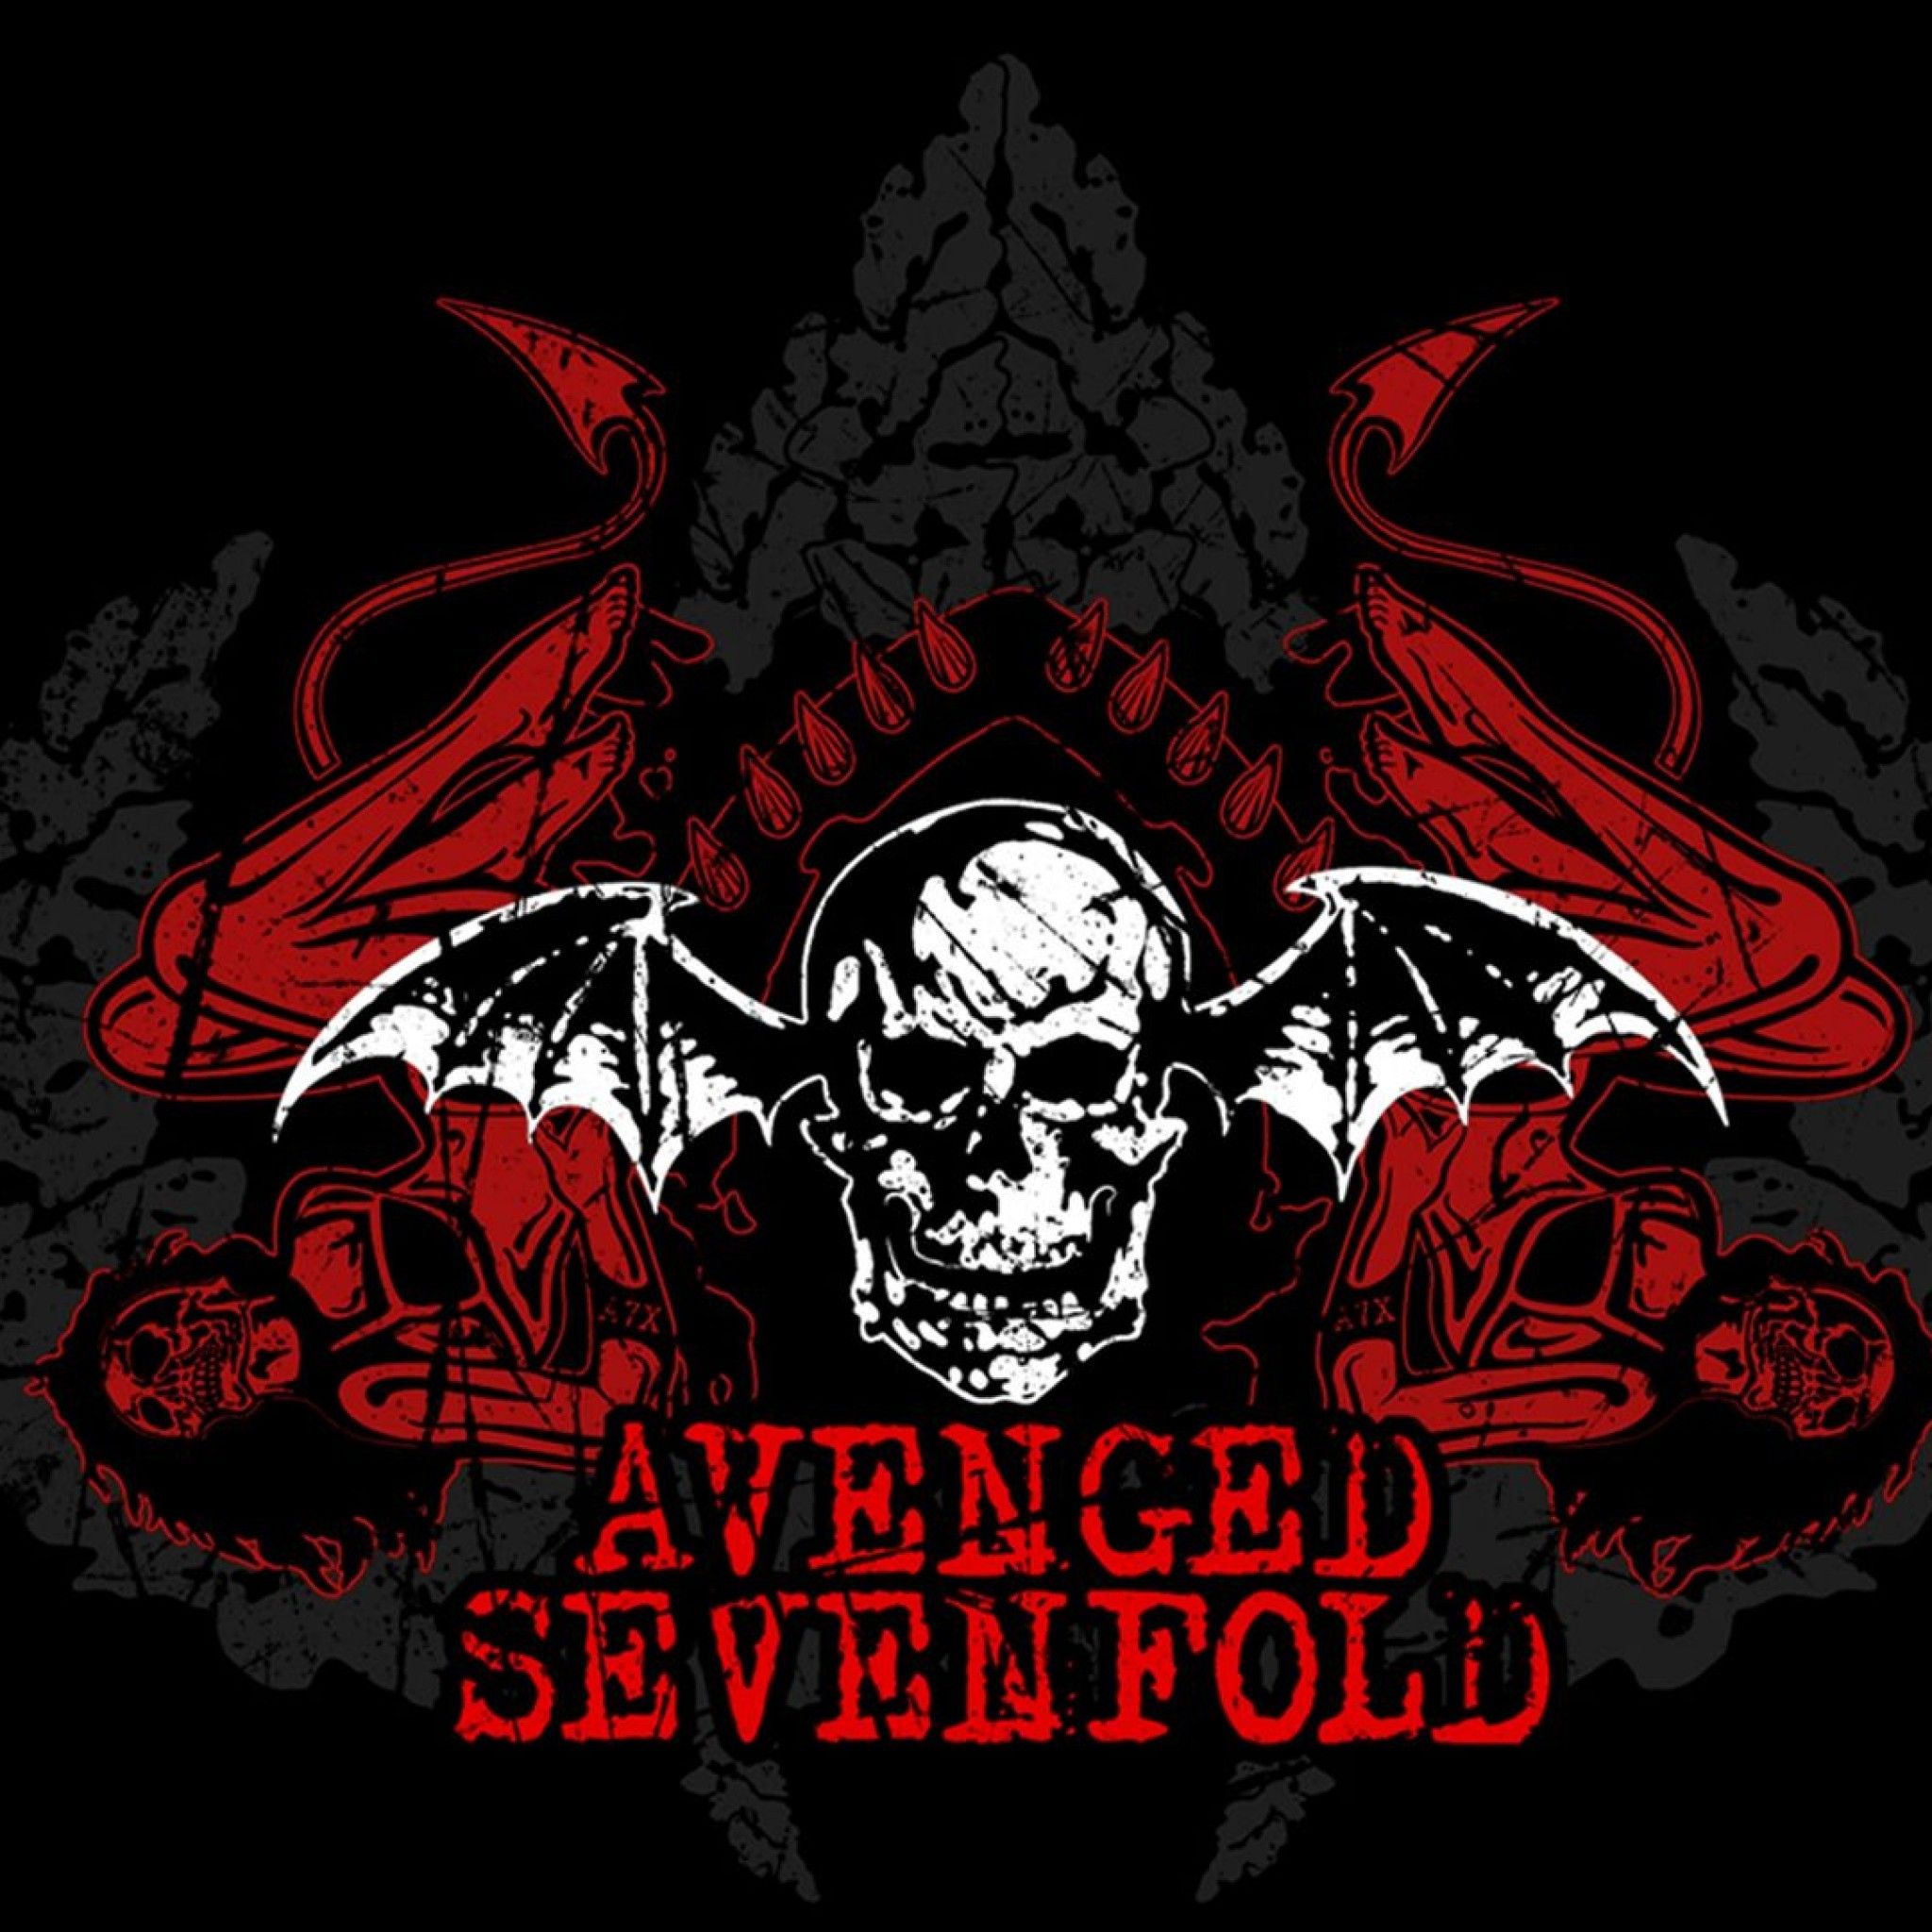 Download Foto Avenged Sevenfold Terbaru - KibrisPDR